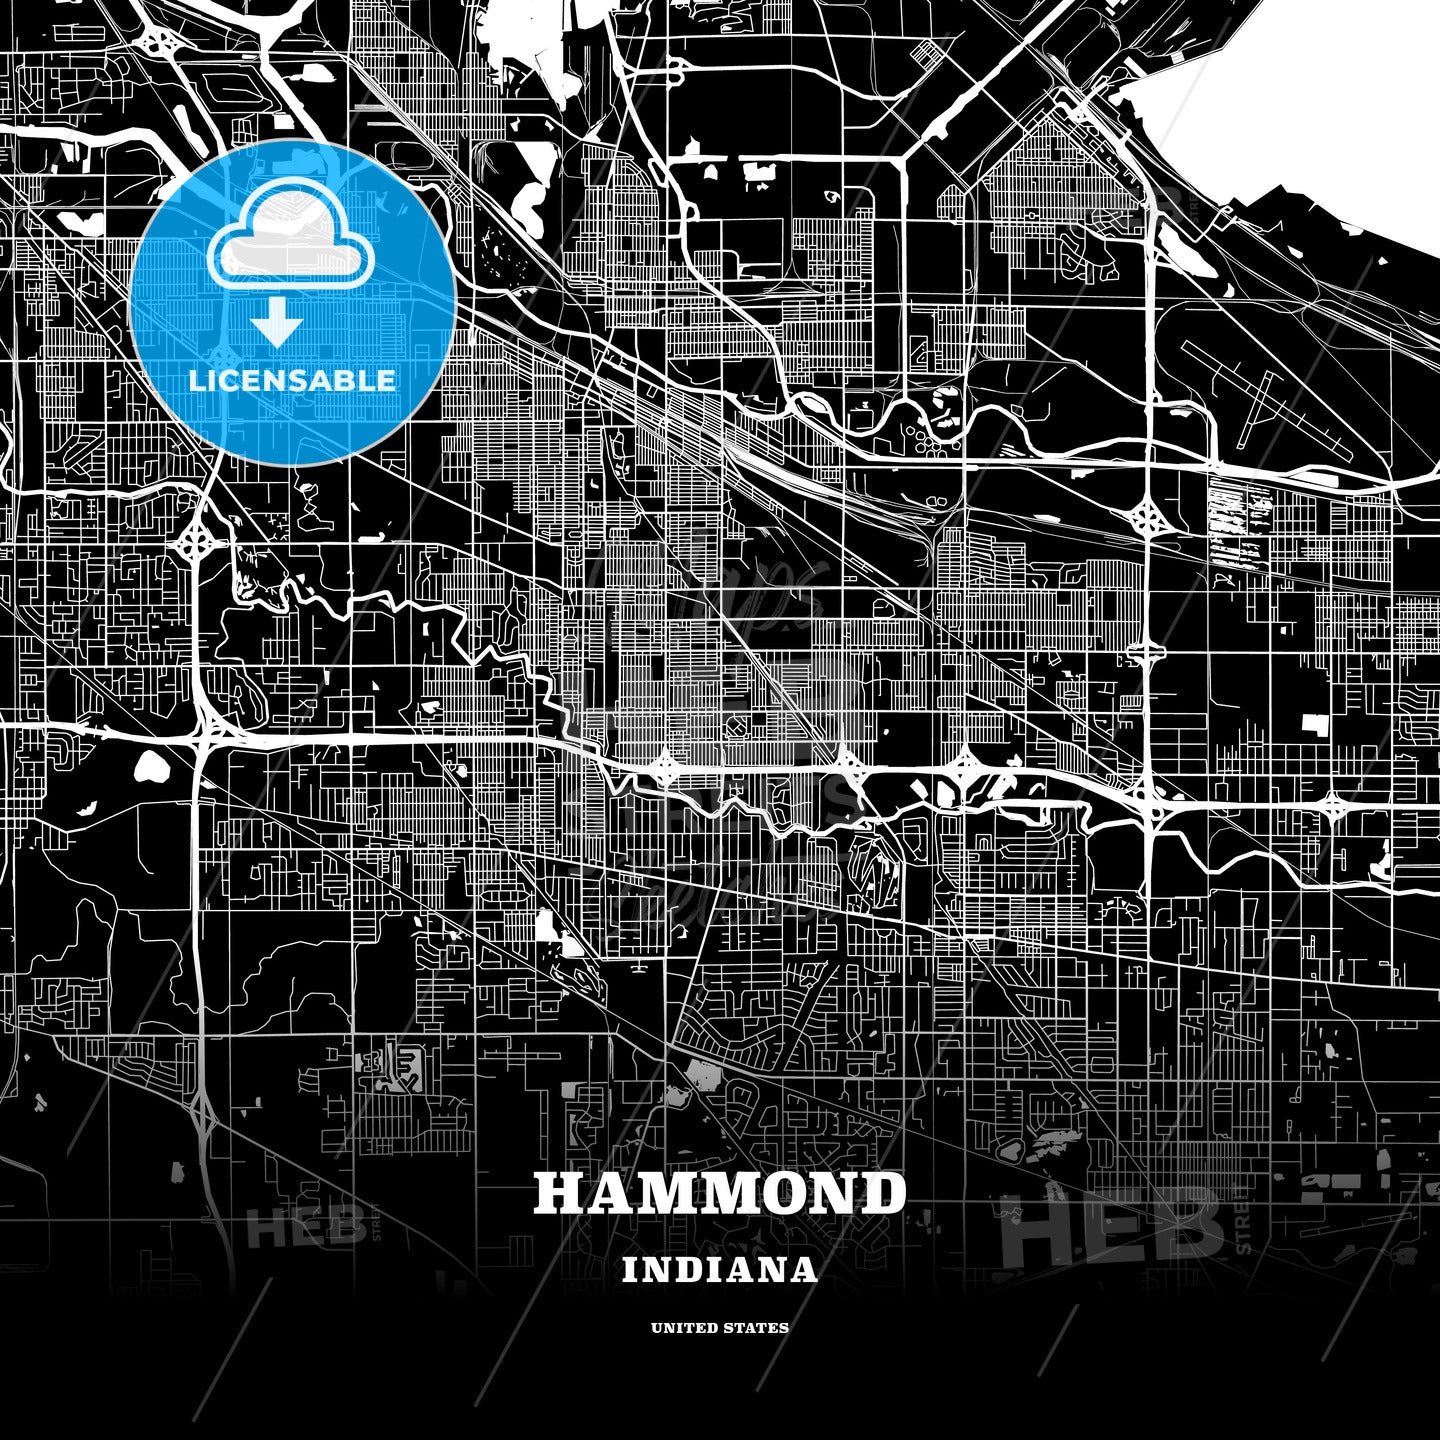 Hammond, Indiana, USA map